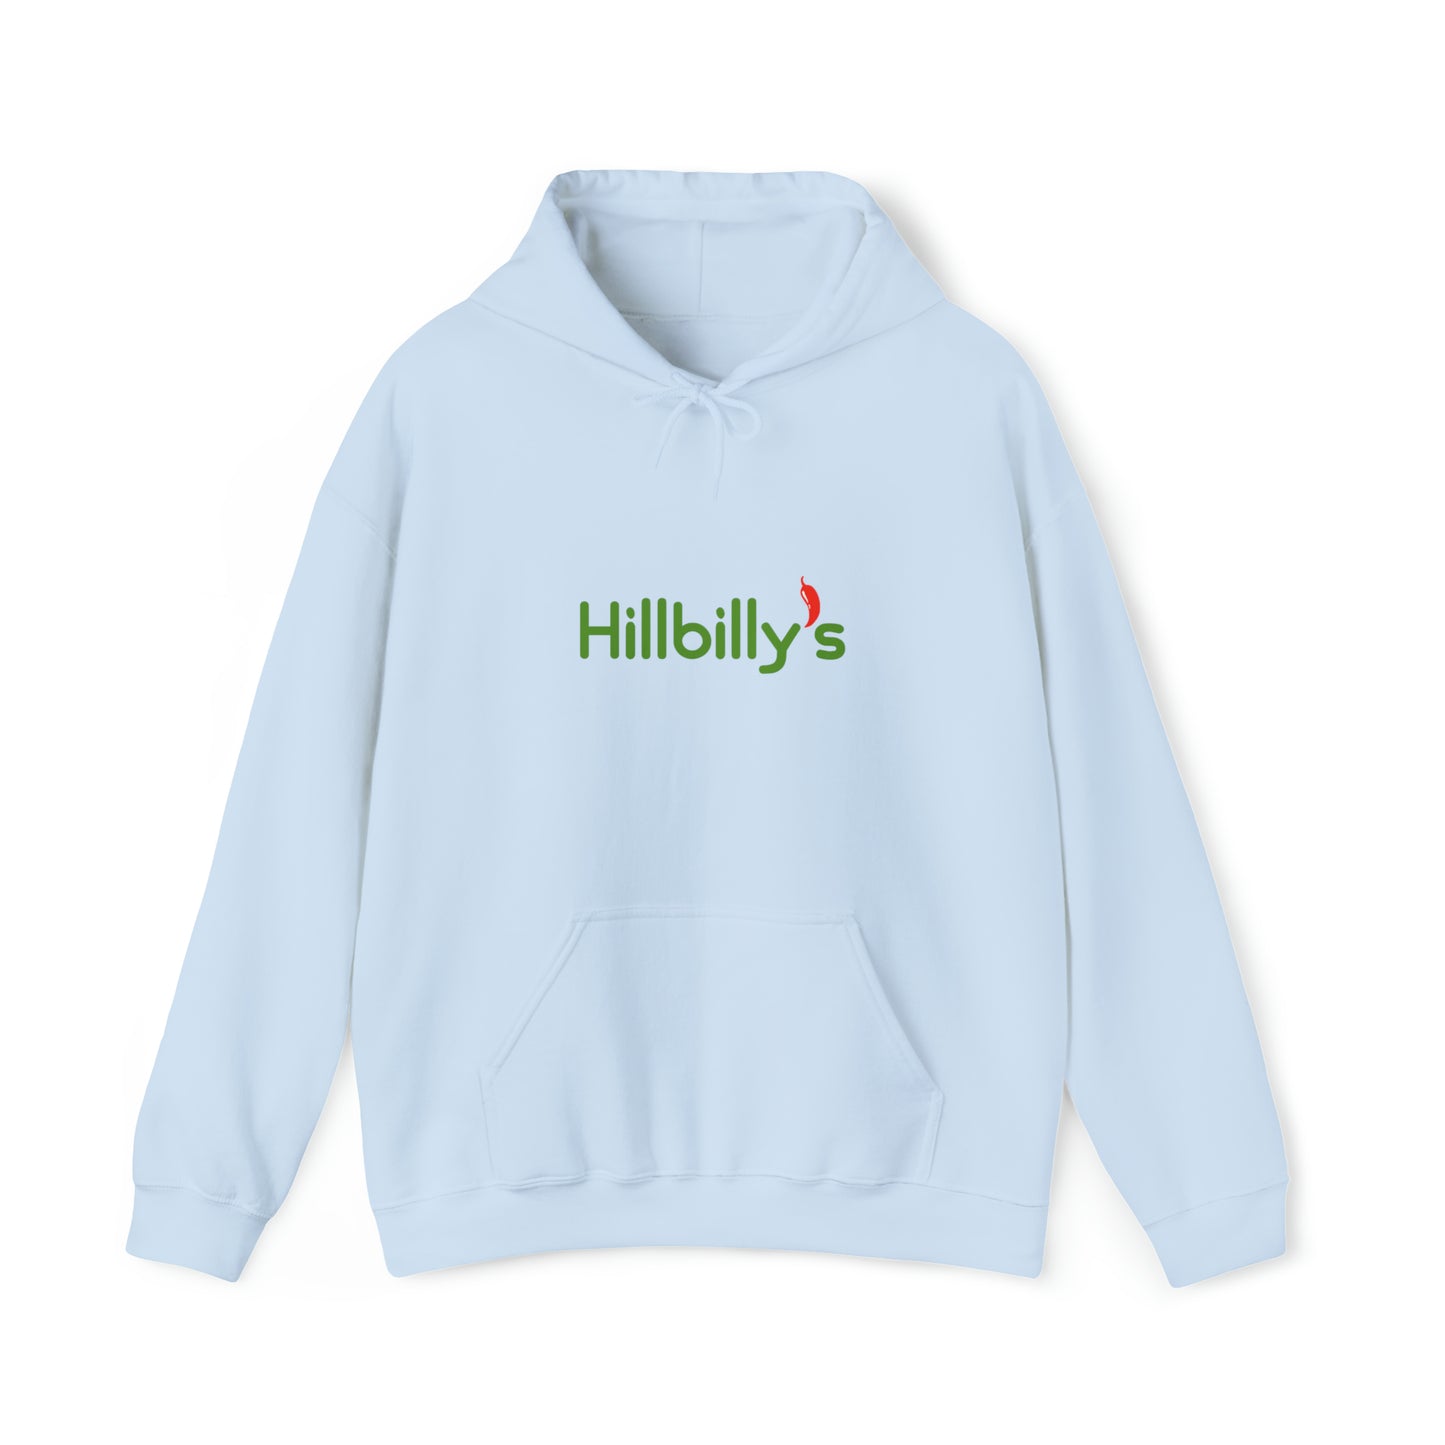 Custom Parody Hooded Sweatshirt, Hillbilly's design